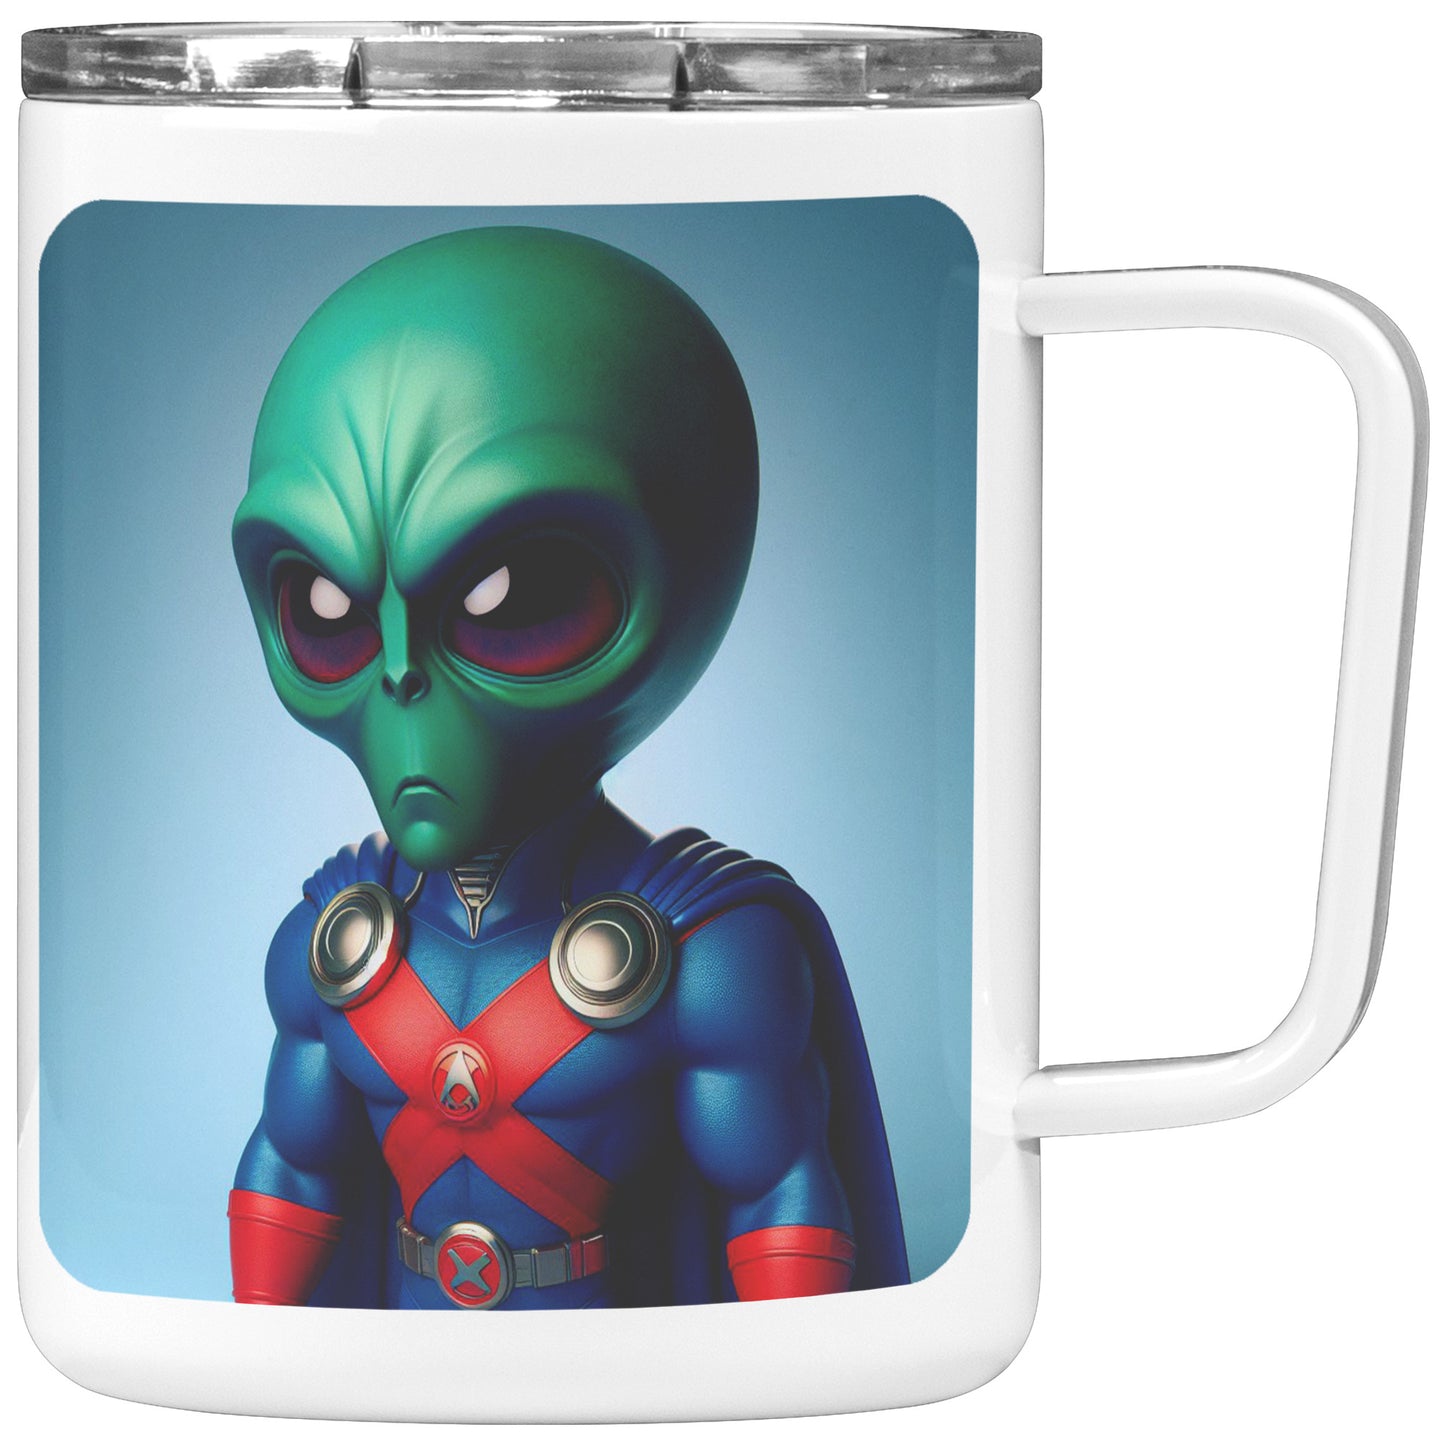 Martian Alien Caricature - Coffee Mug #11